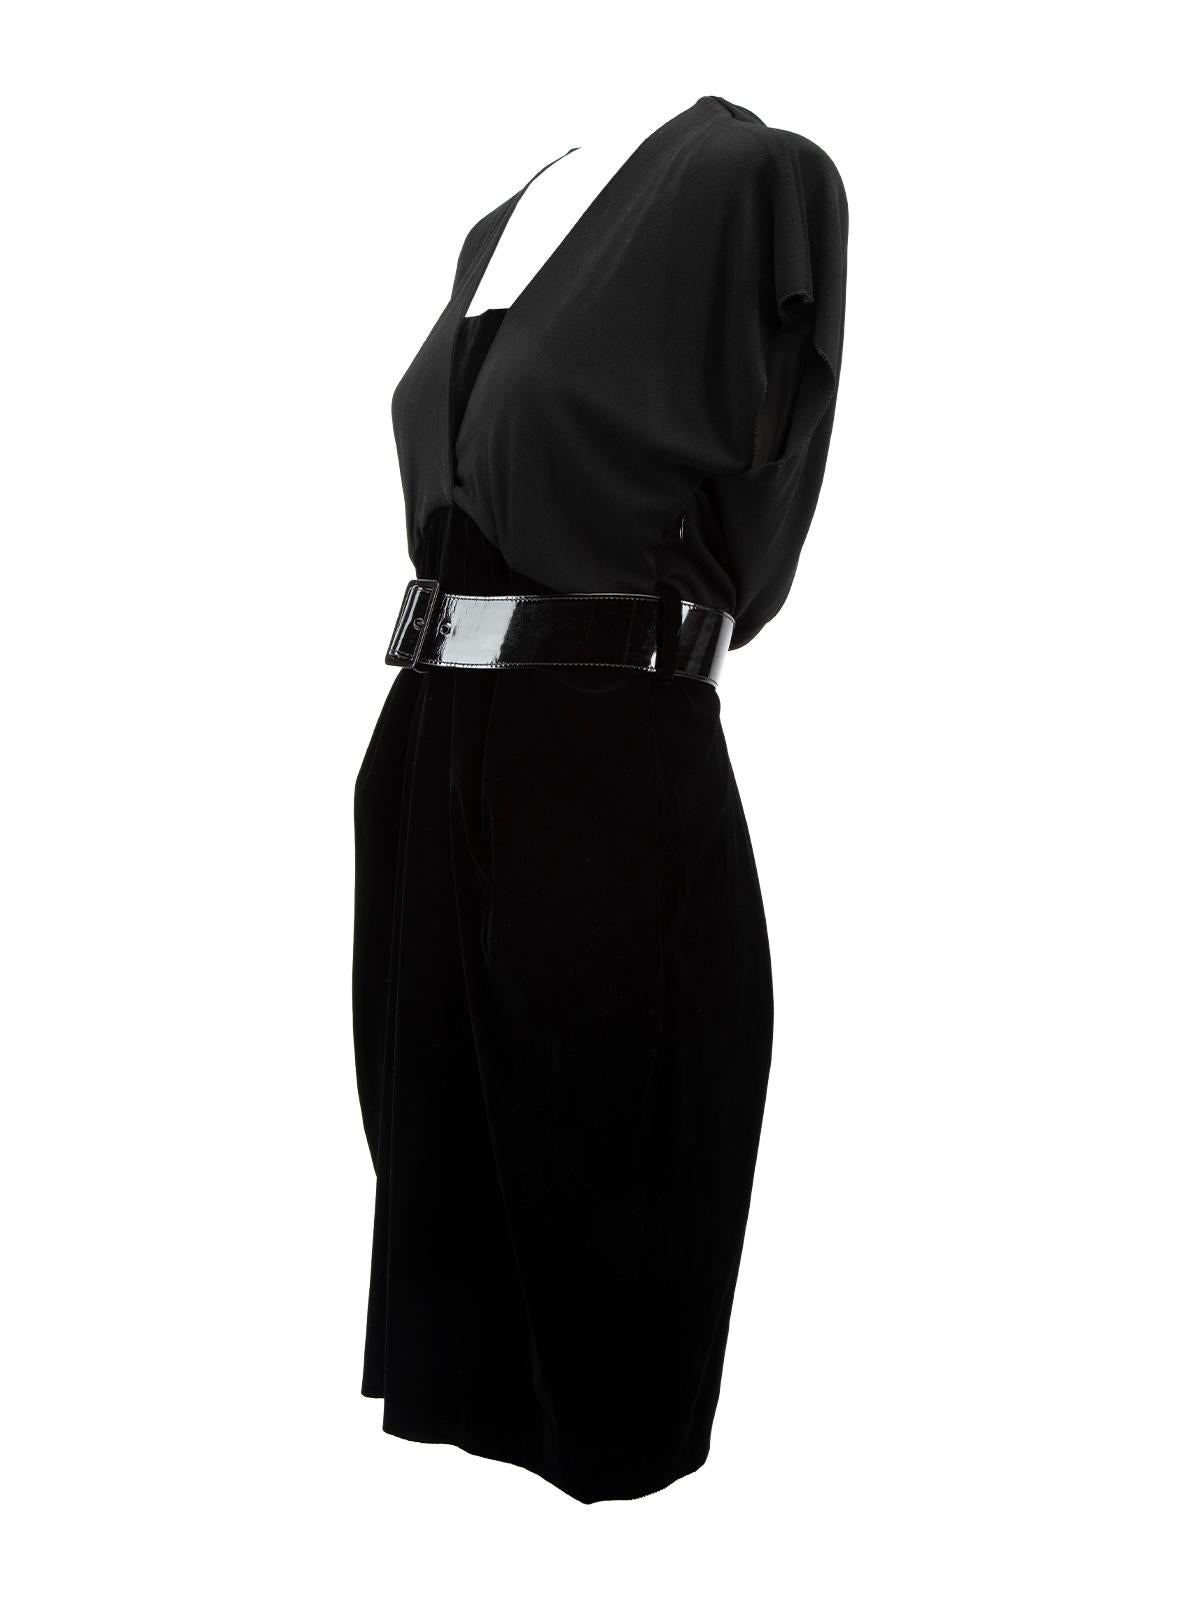 Pre-Loved Jean Paul Gaultier Women's Black Velvet Dress with Leather Harness 1